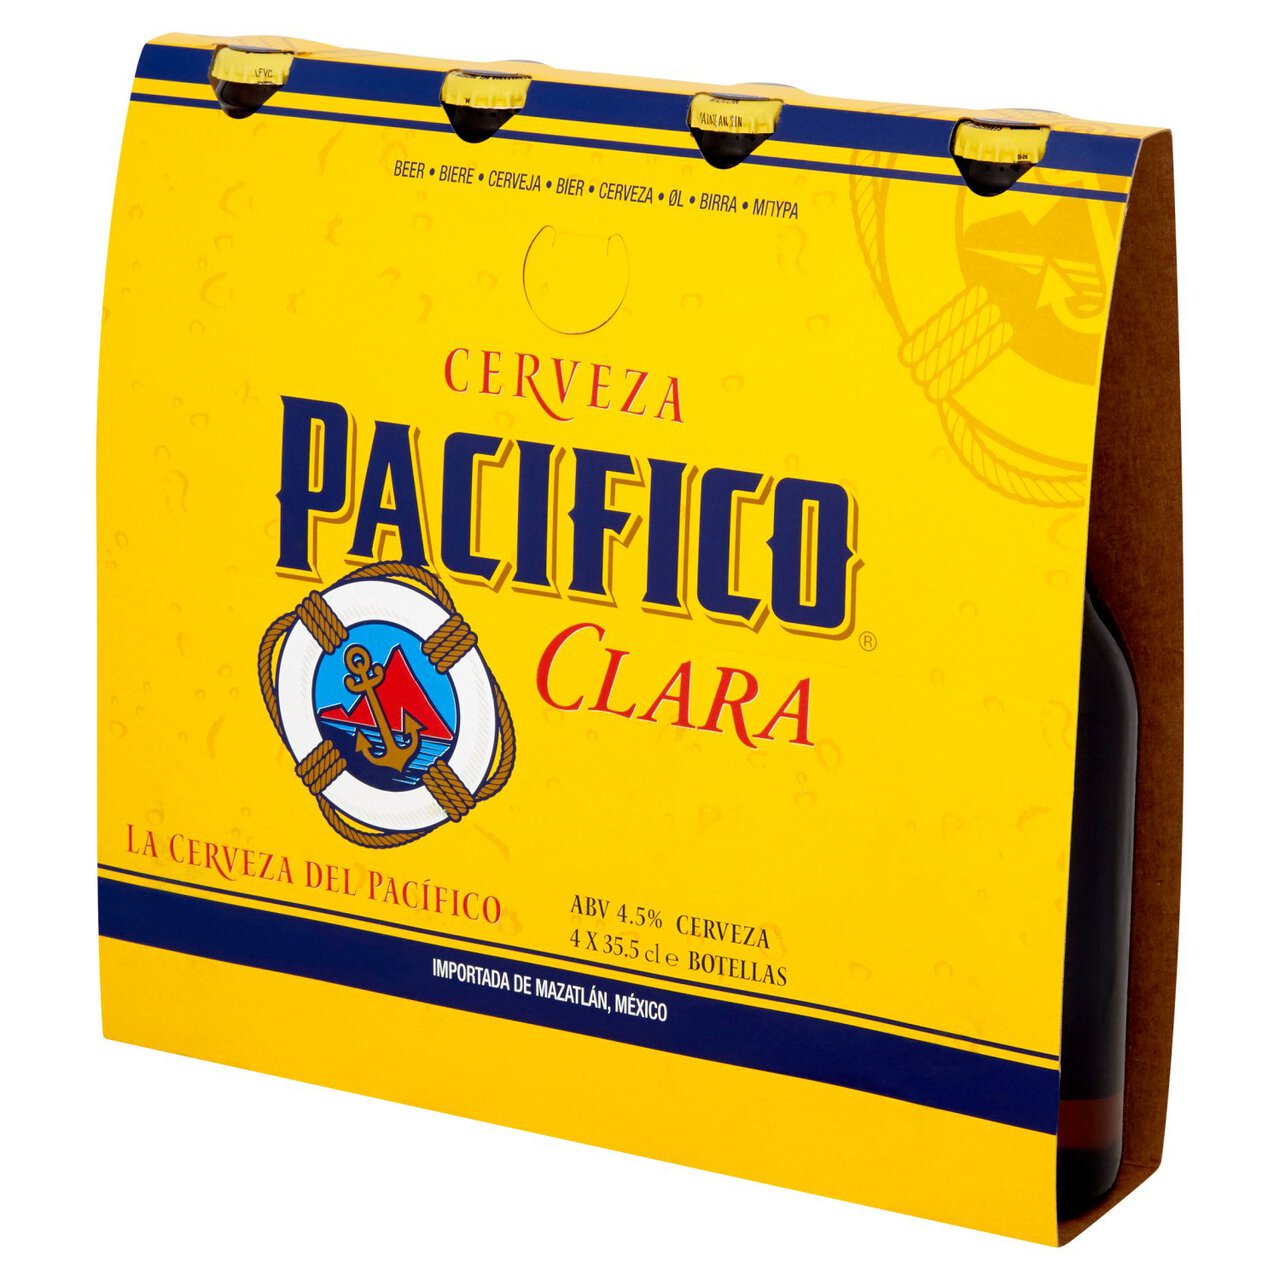 Pacifico Clara Mexican Beer 4 x 355ml